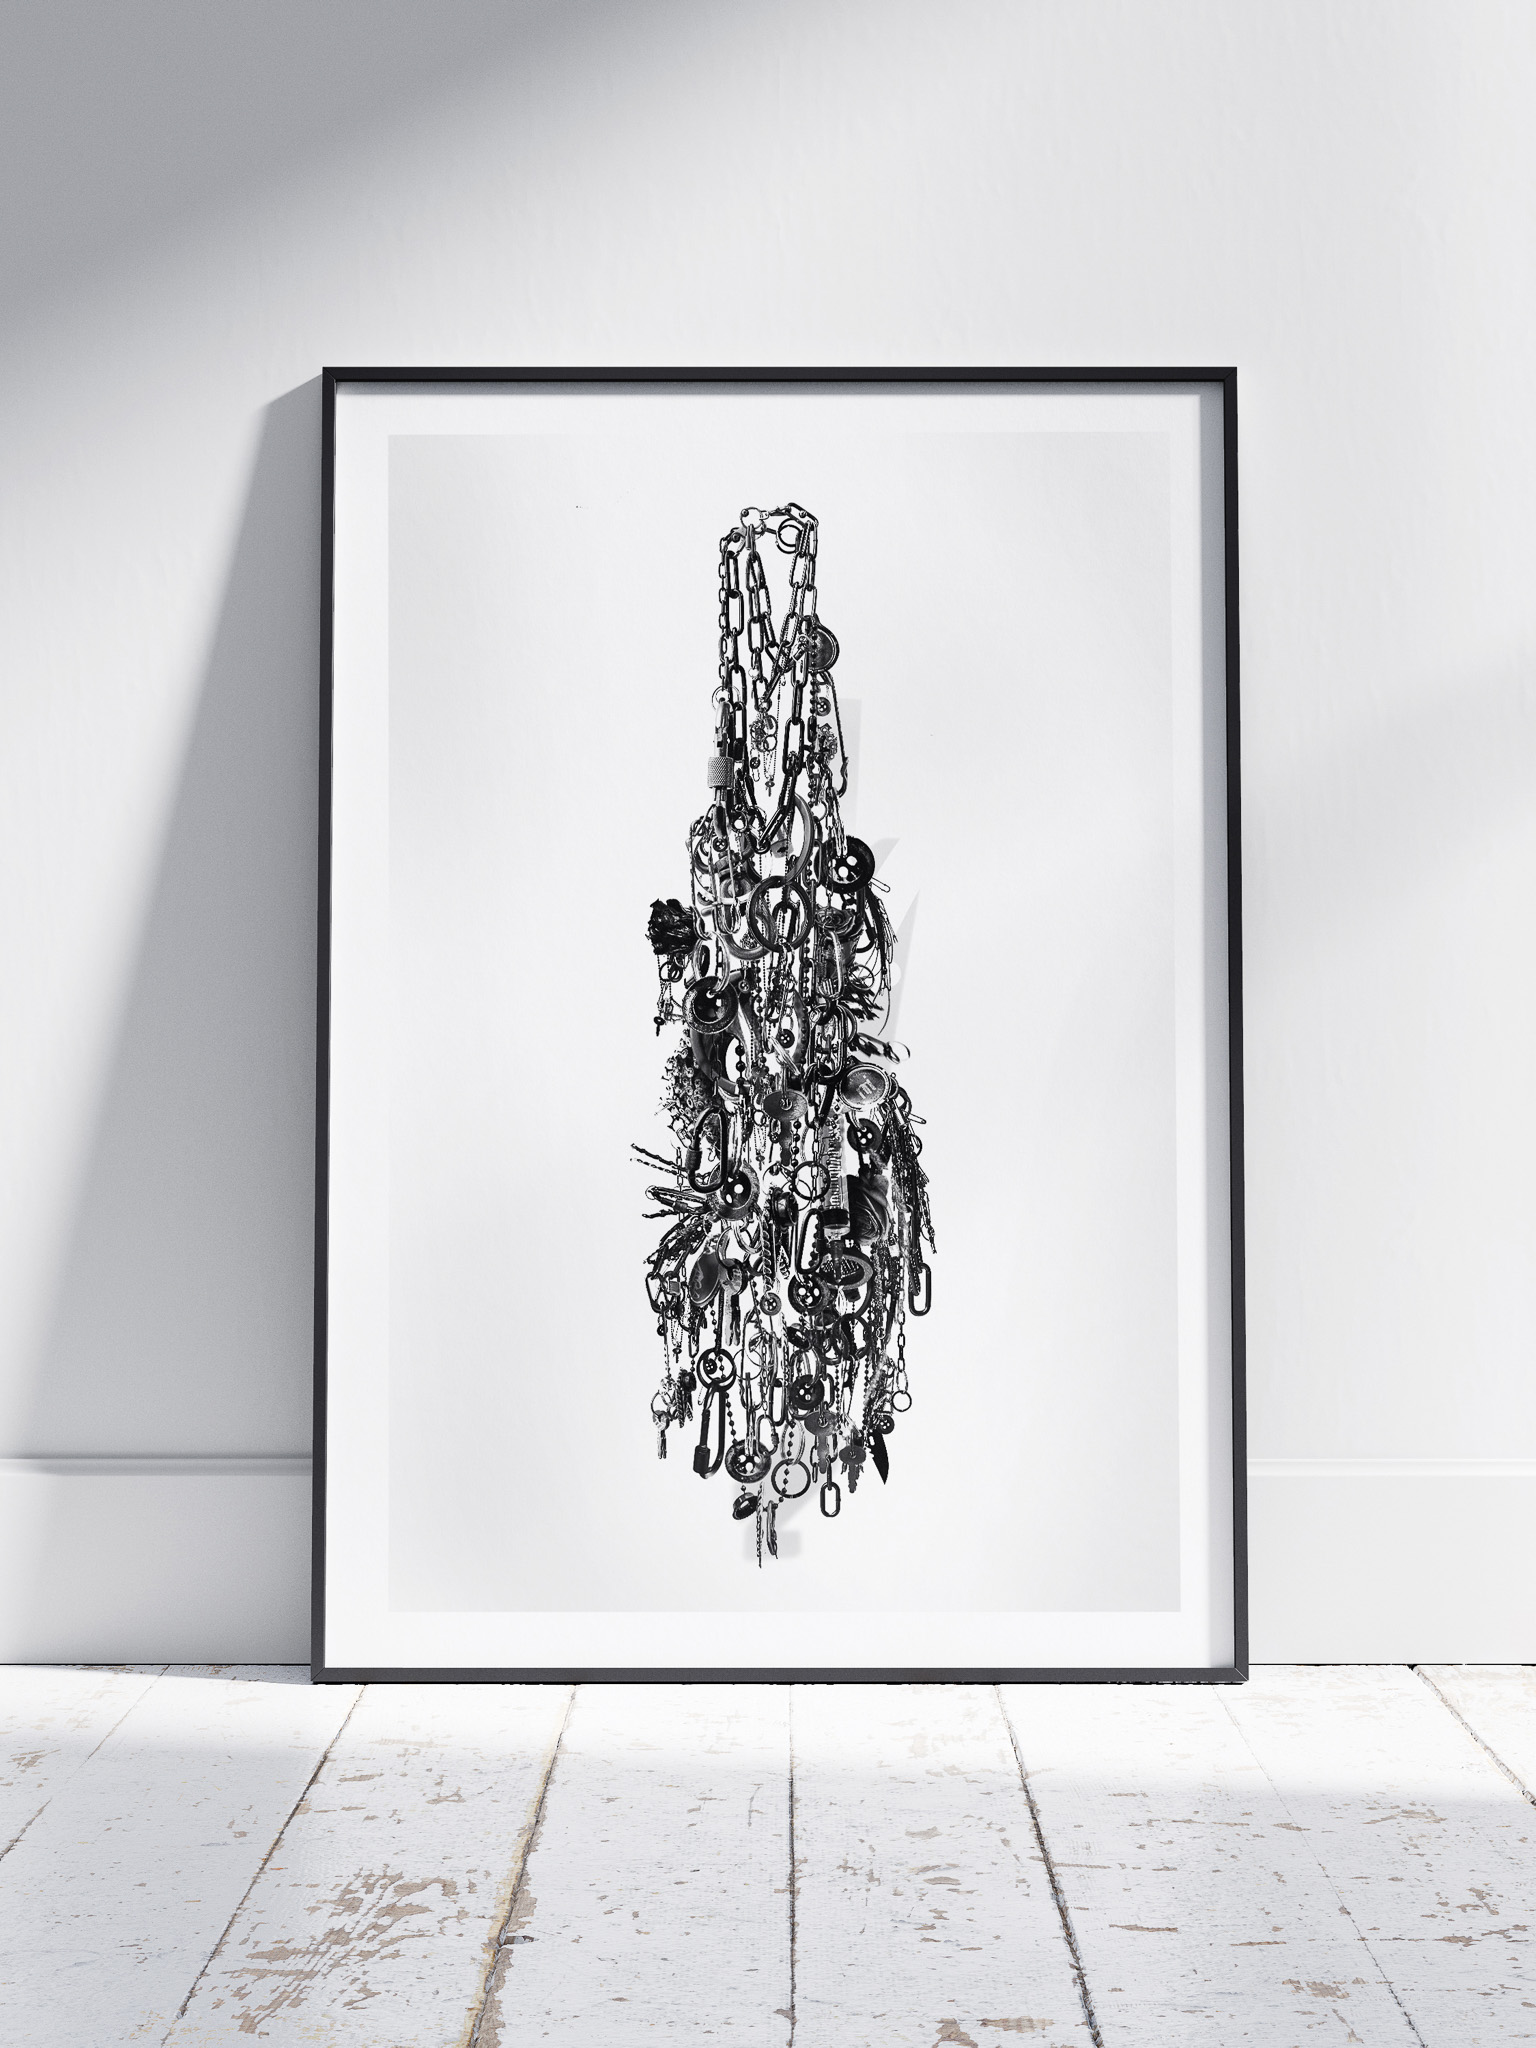 The Wick - AROMOUR - Digital Print - 59.4cm x 84.1cm, by Nigel Stefani, courtesy of the artist